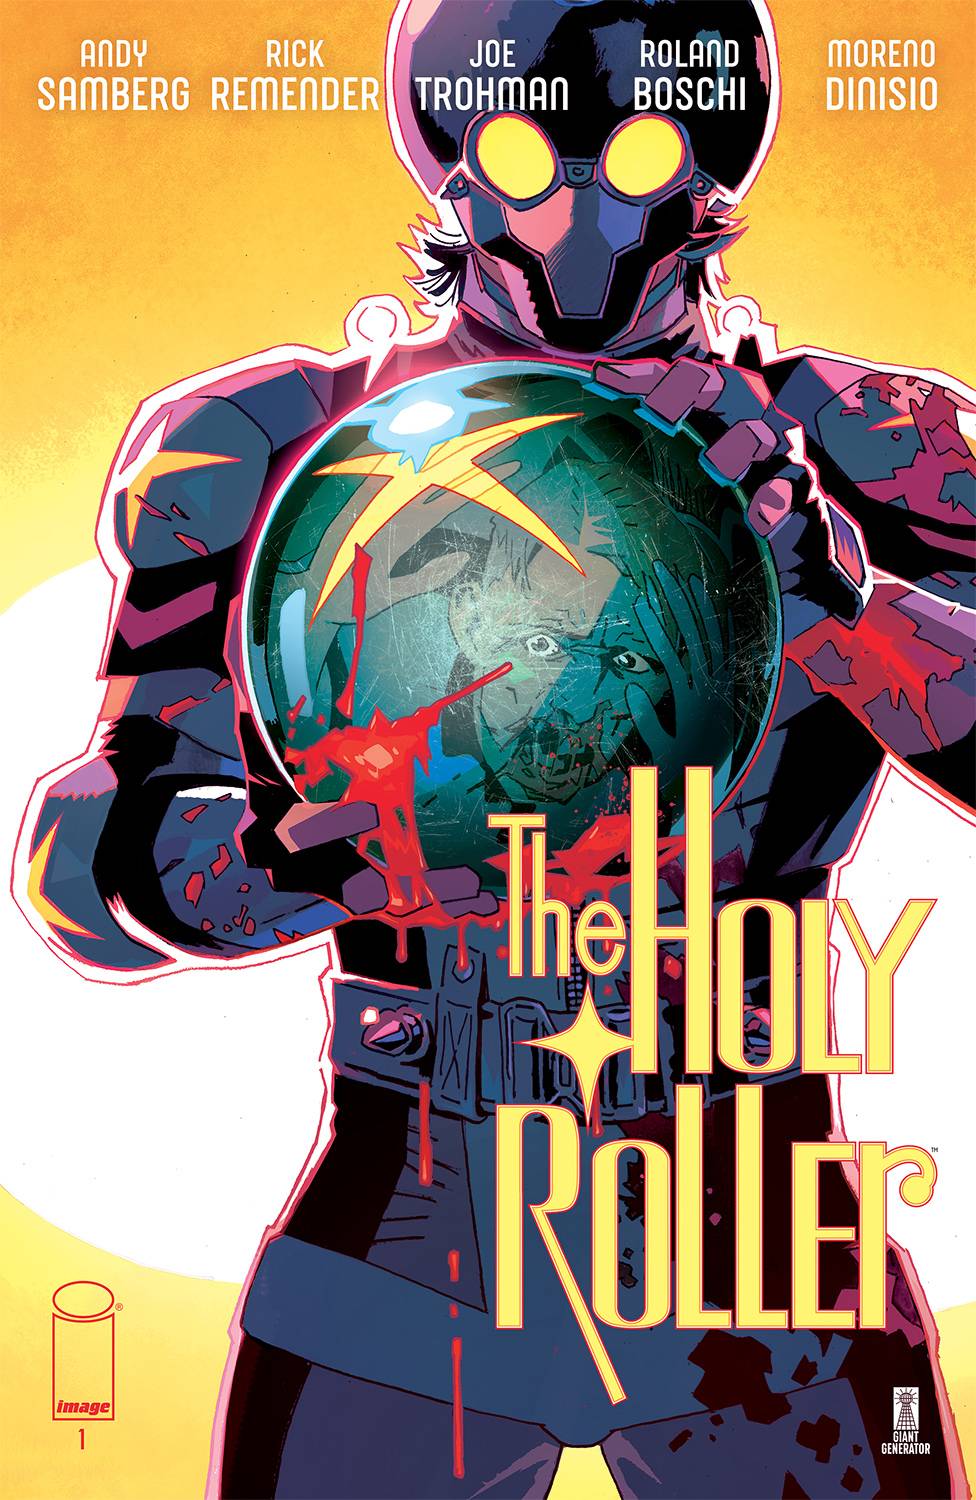 HOLY ROLLER #1 CVR A BOSCHI cover